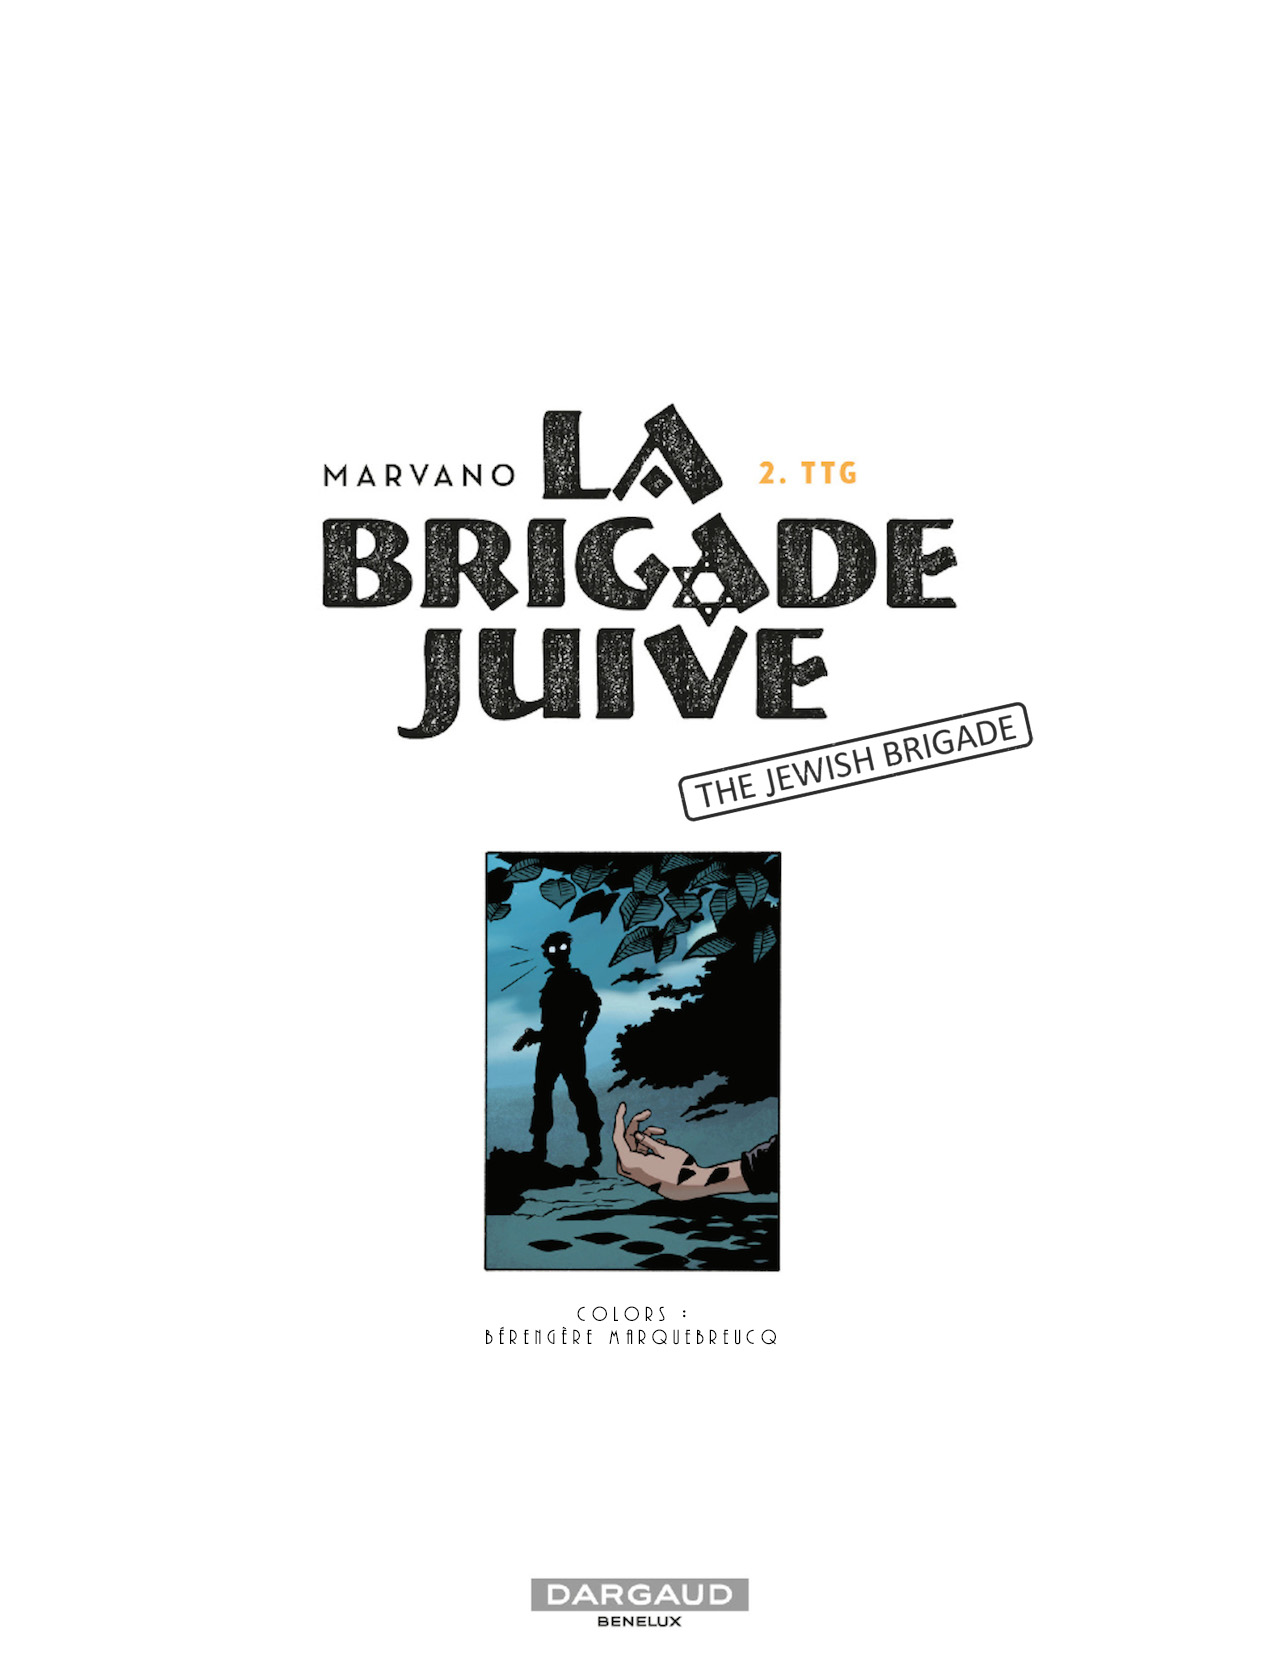 Read online The Jewish Brigade comic -  Issue #2 - 2